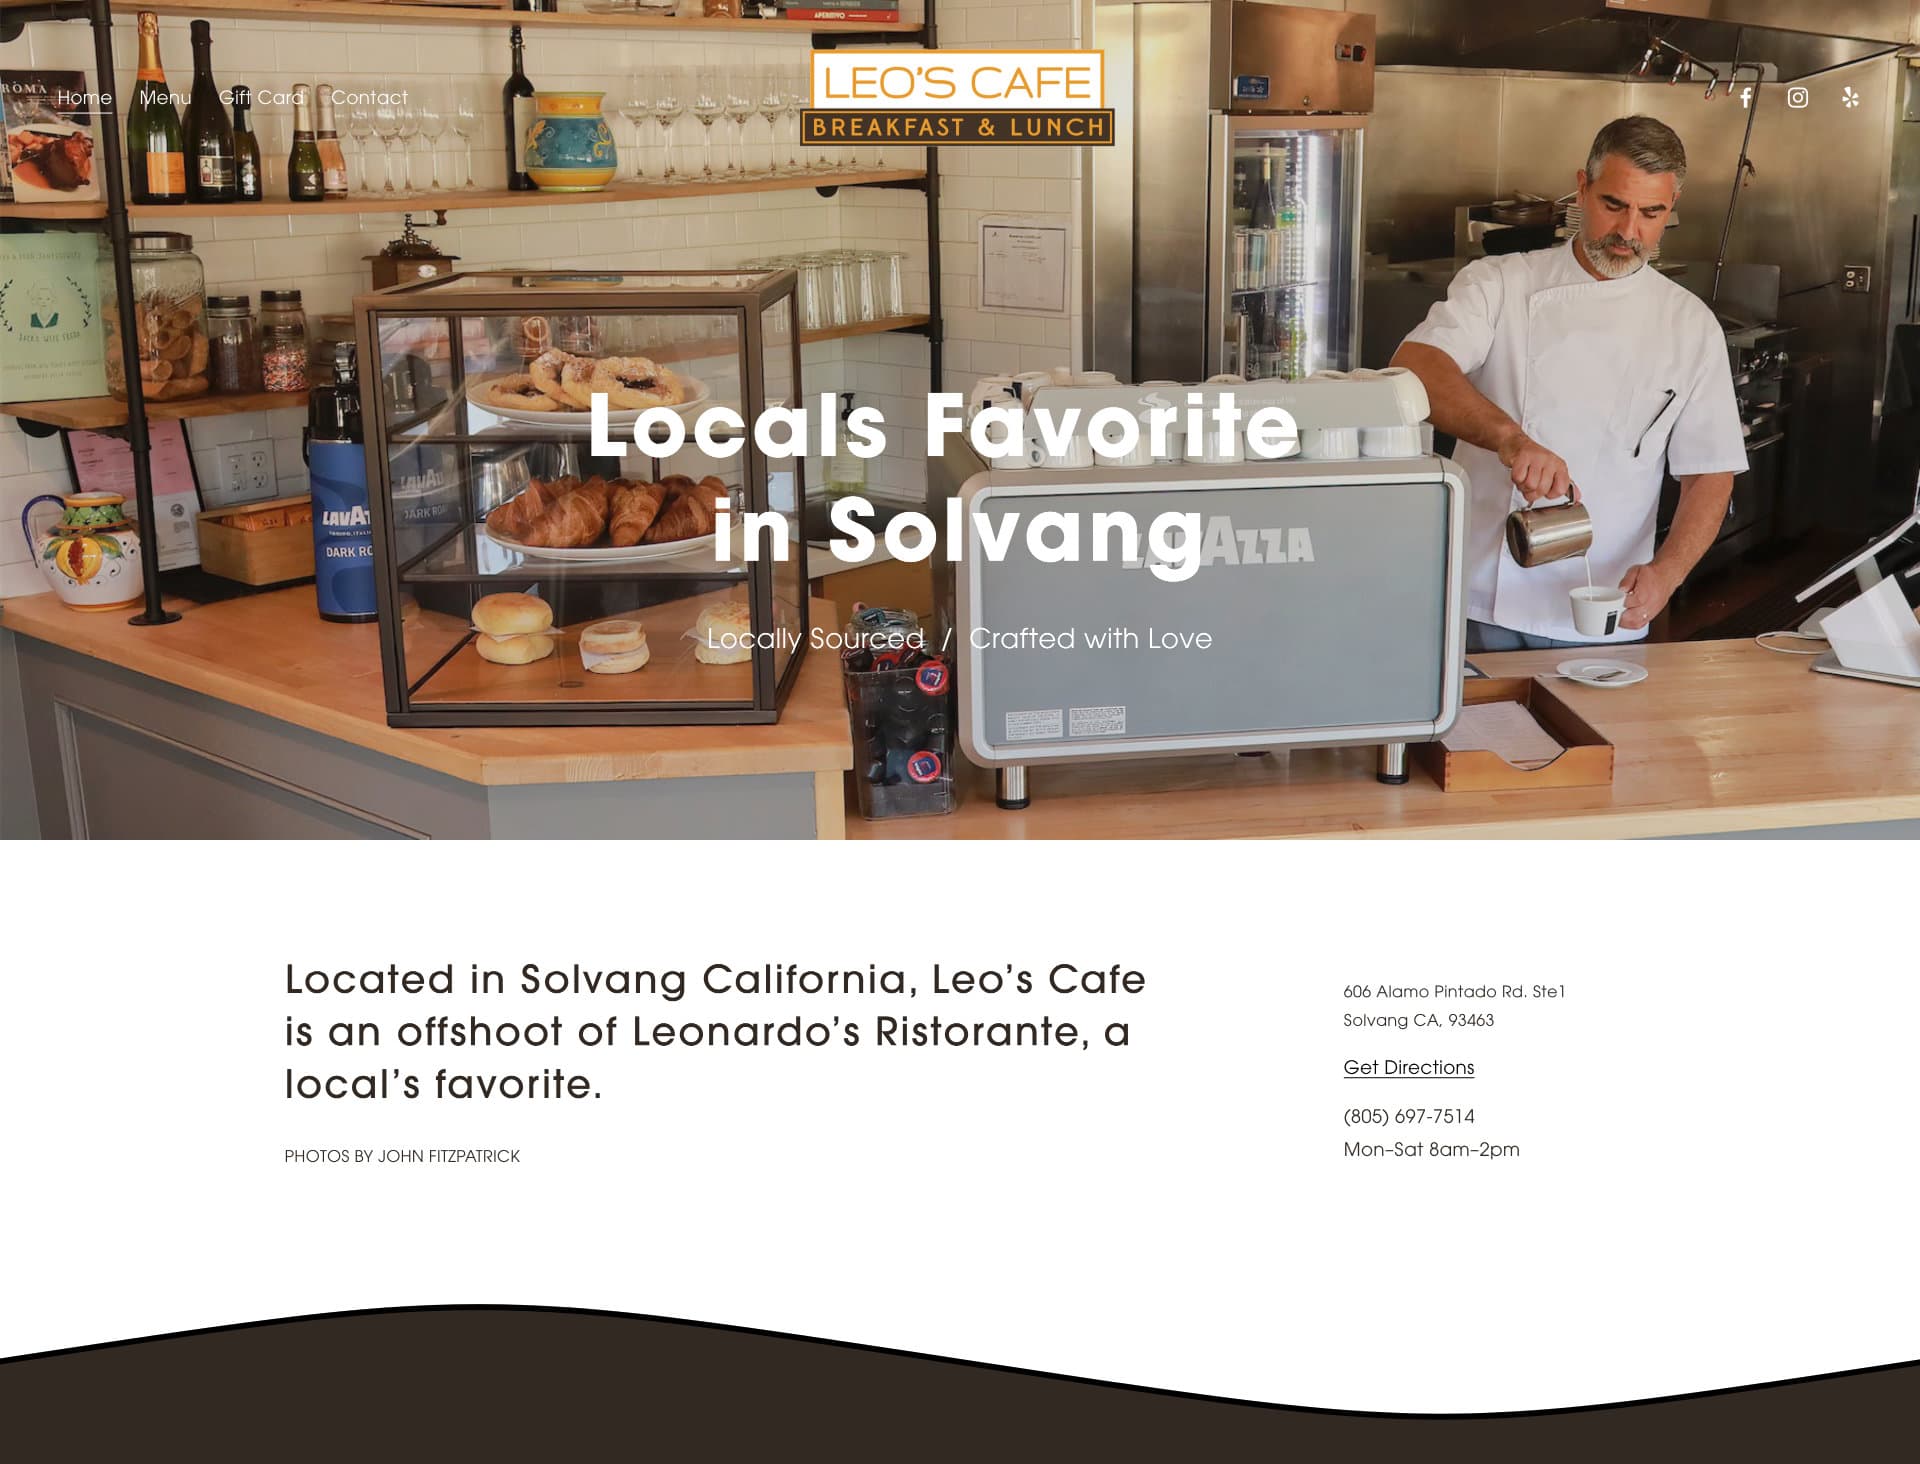 Leo's Cafe Solvang - Great Breakfast!